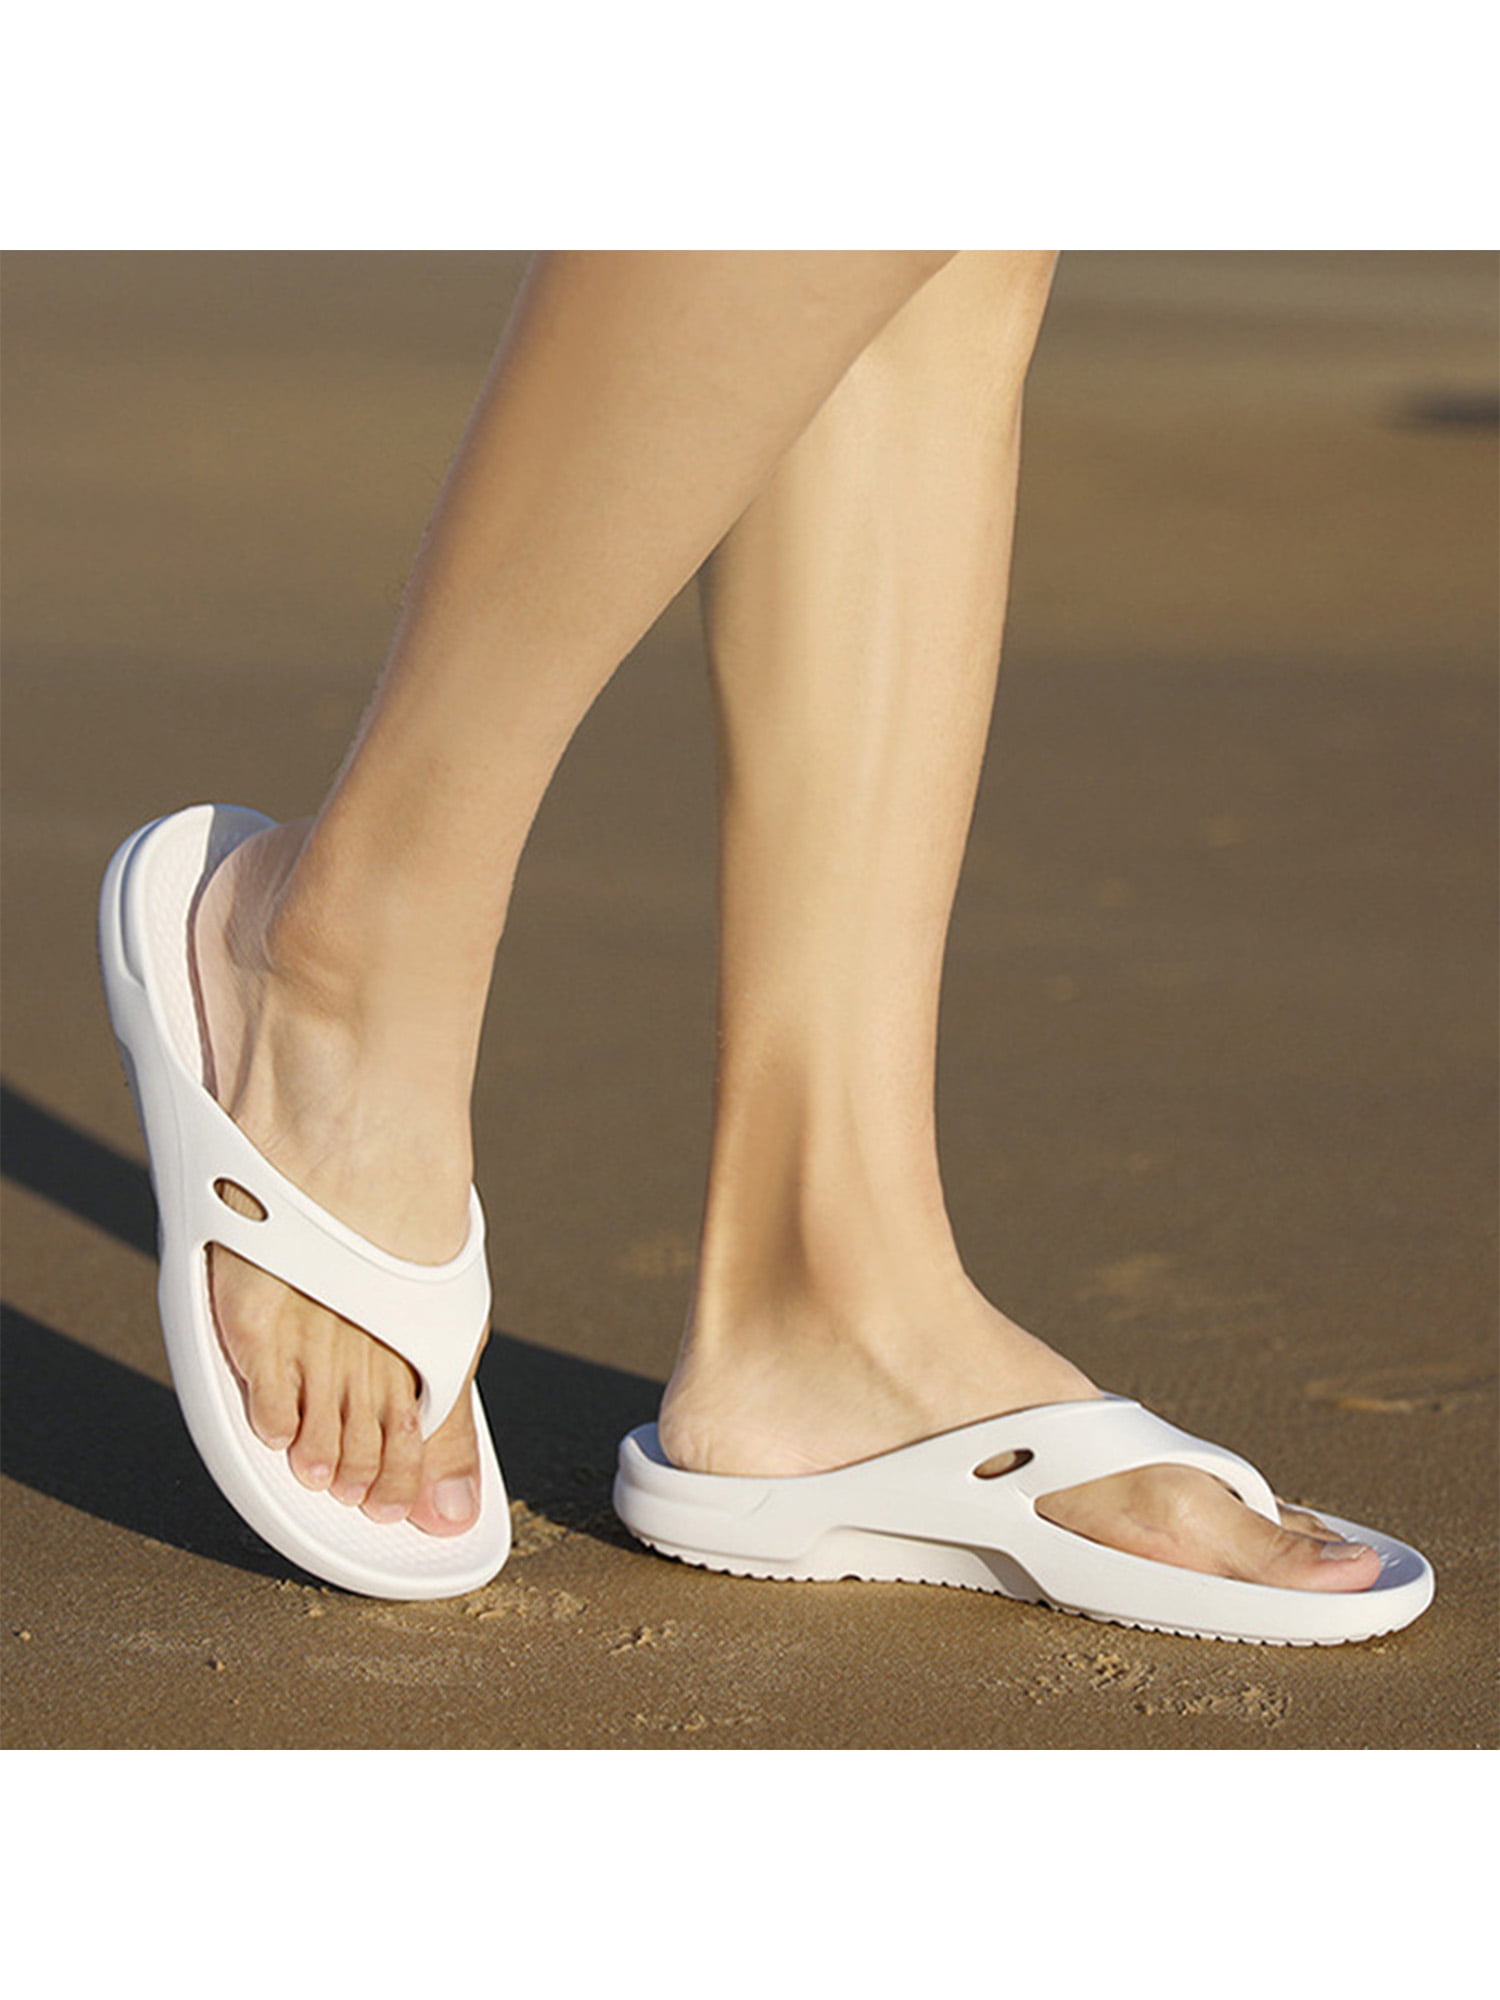 Sea slippers